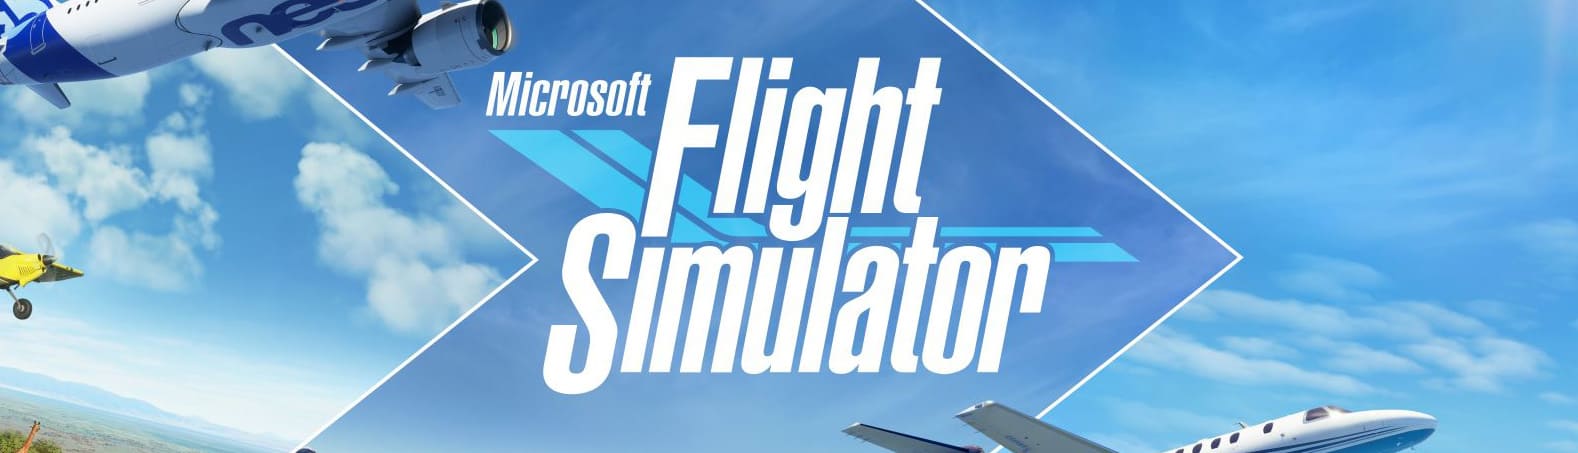 How to install Microsoft Flight simulator 2020 on STEAM 